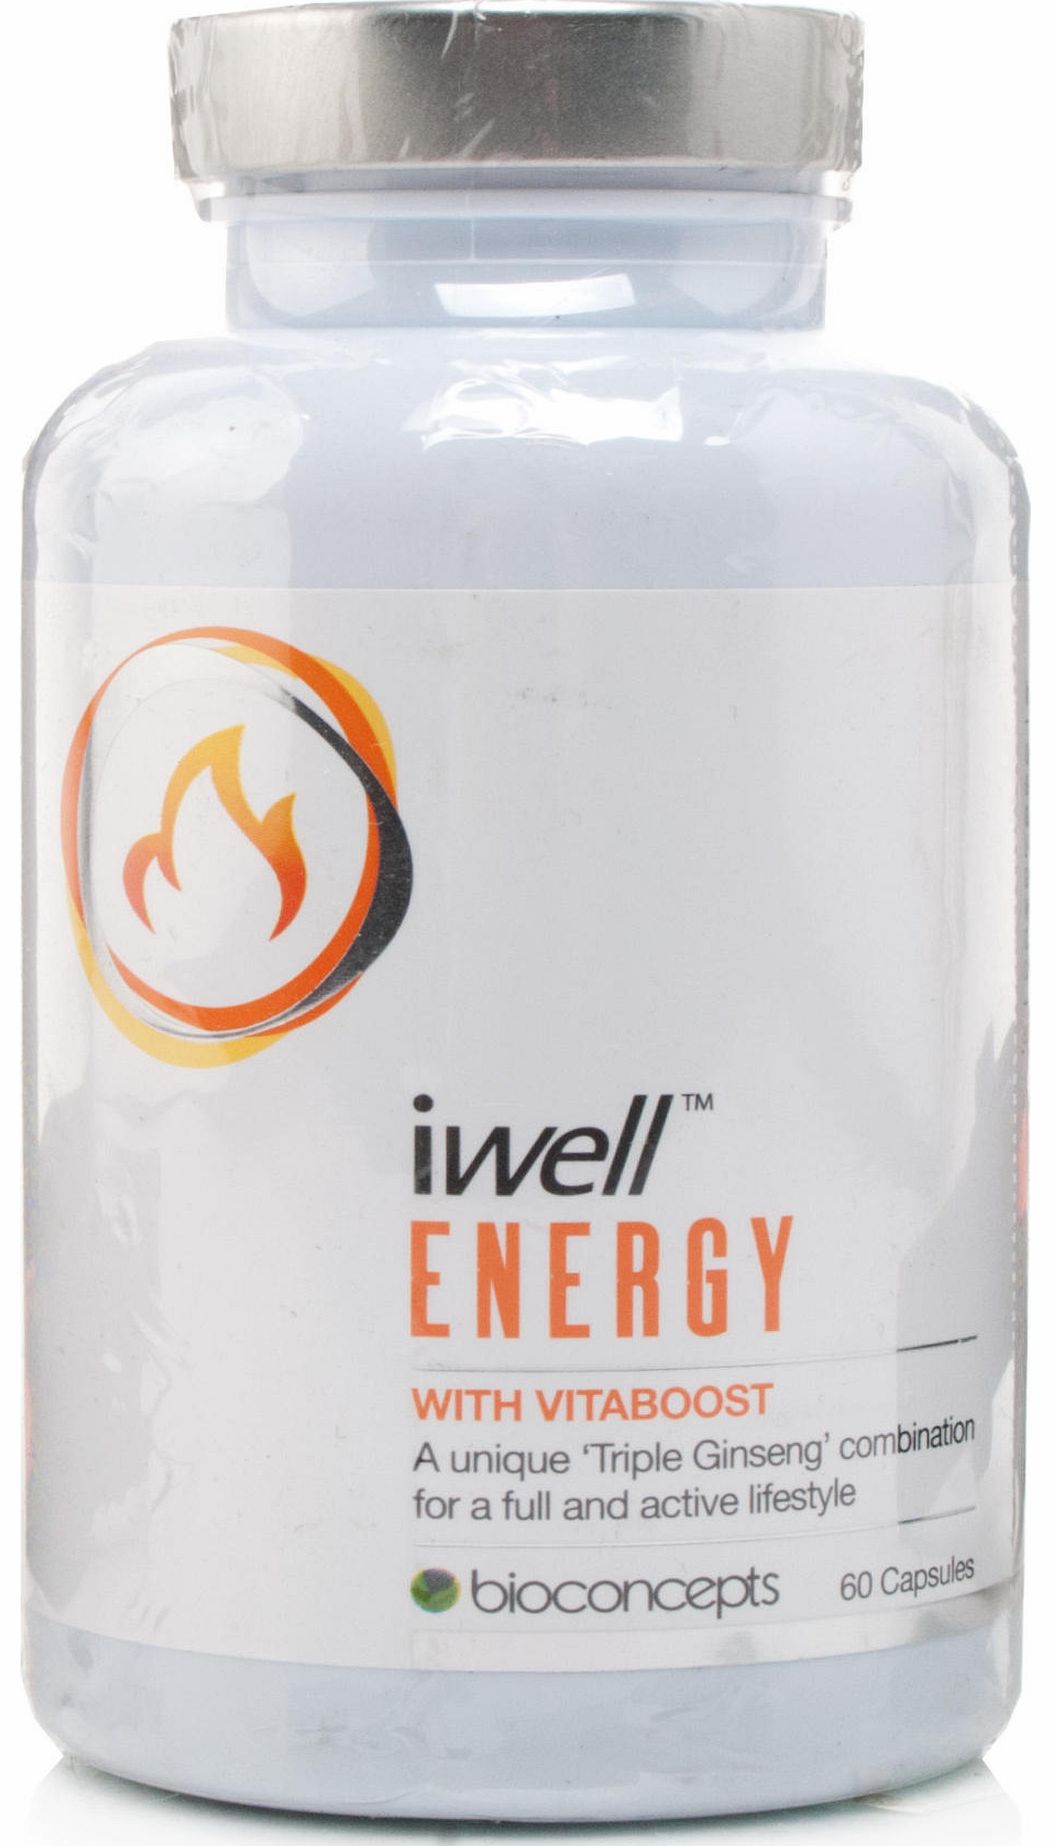 Bioconcepts iwell Energy Vitaboost